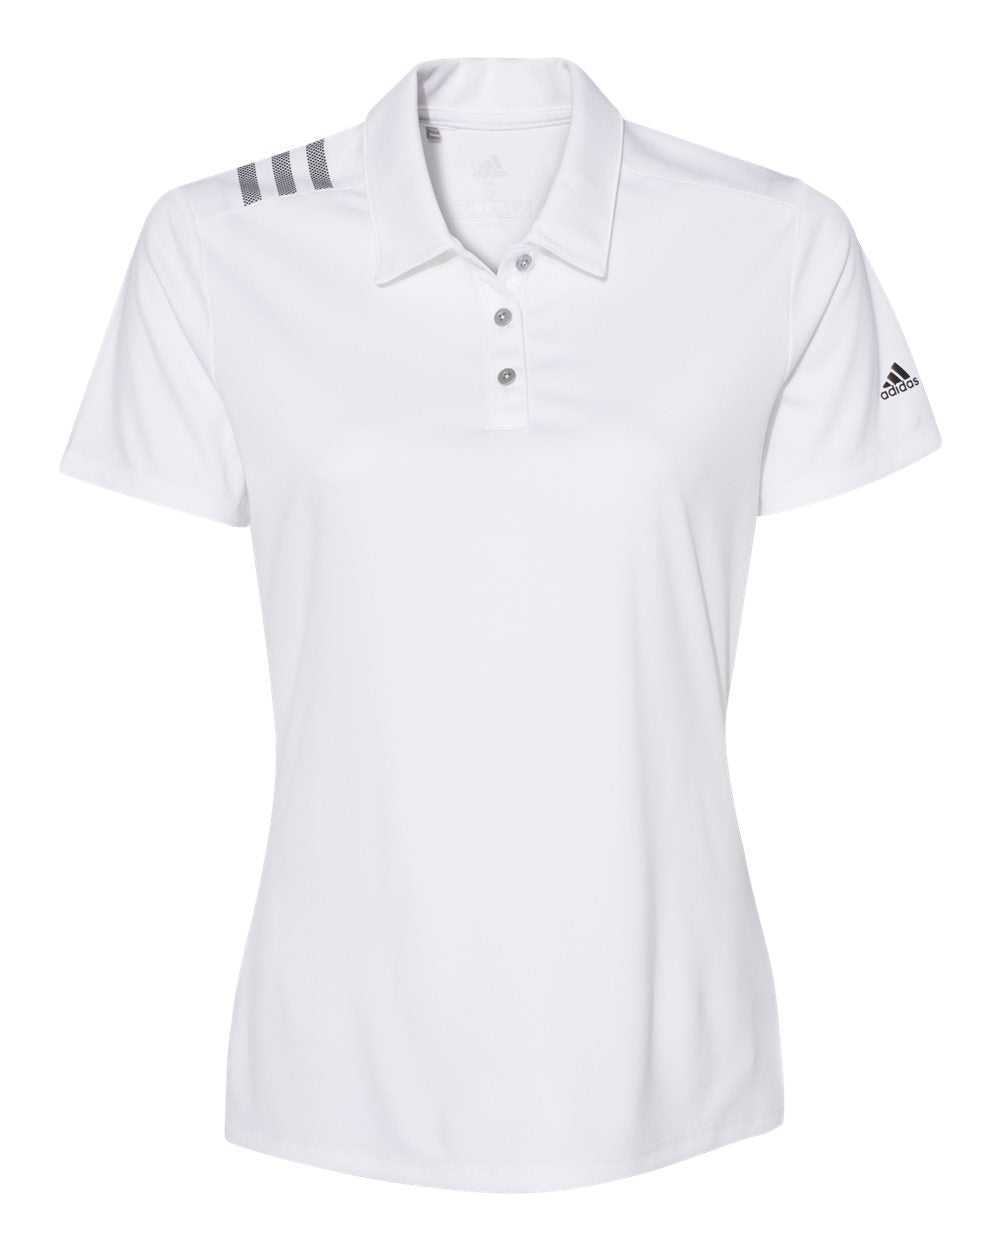 Adidas A325 Women's 3-Stripes Shoulder Sport Shirt - White Black - HIT a Double